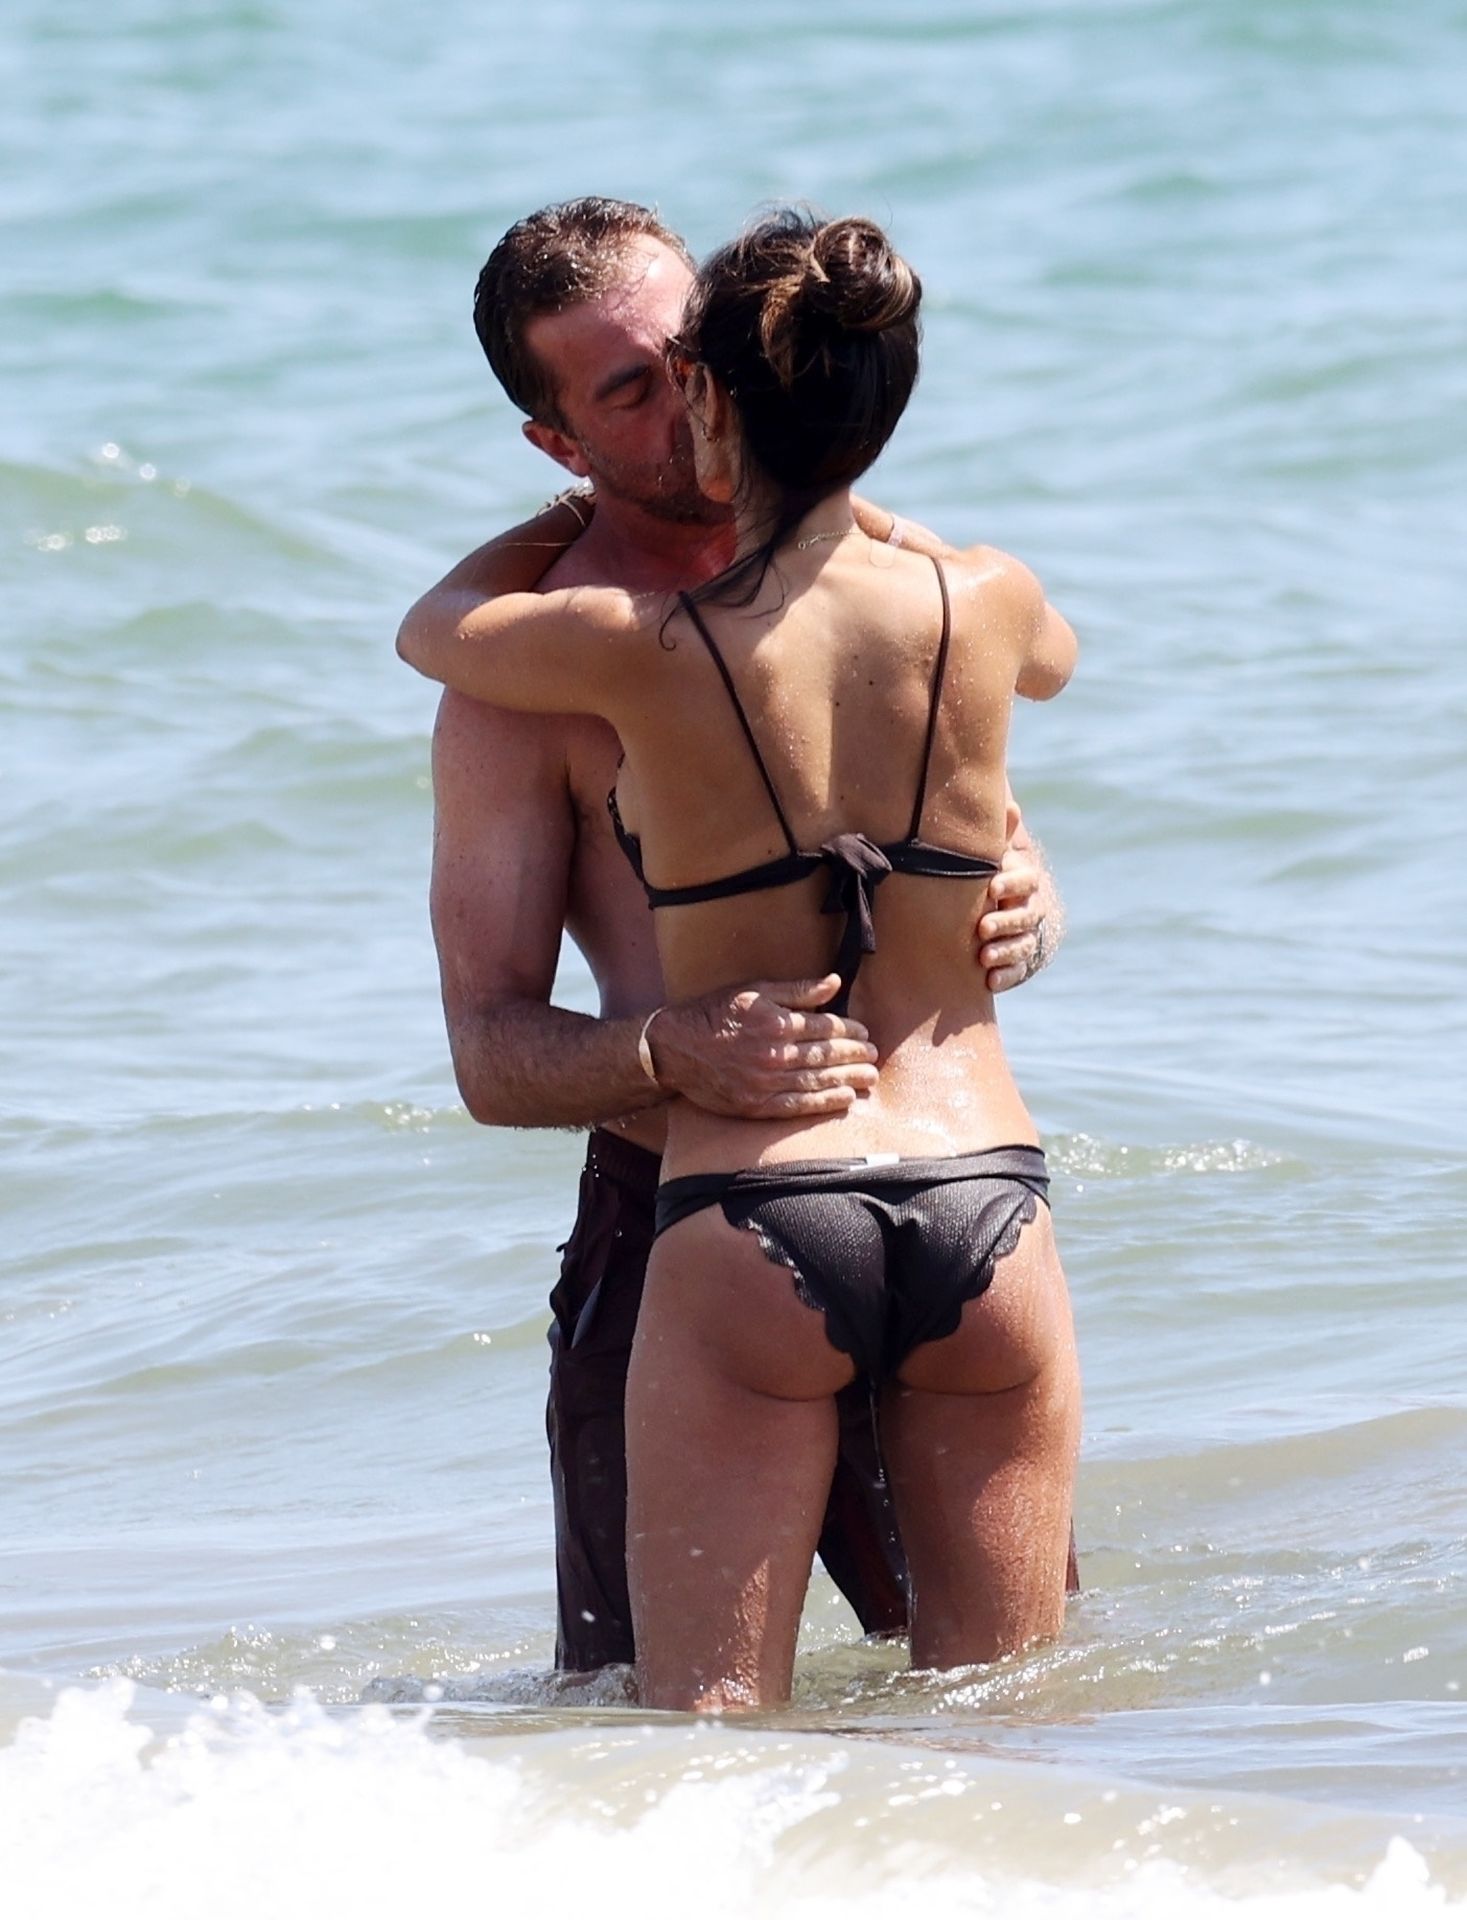 Jordana Brewster & Mason Morfit Enjoy a Romantic Beach Day Packed with ...